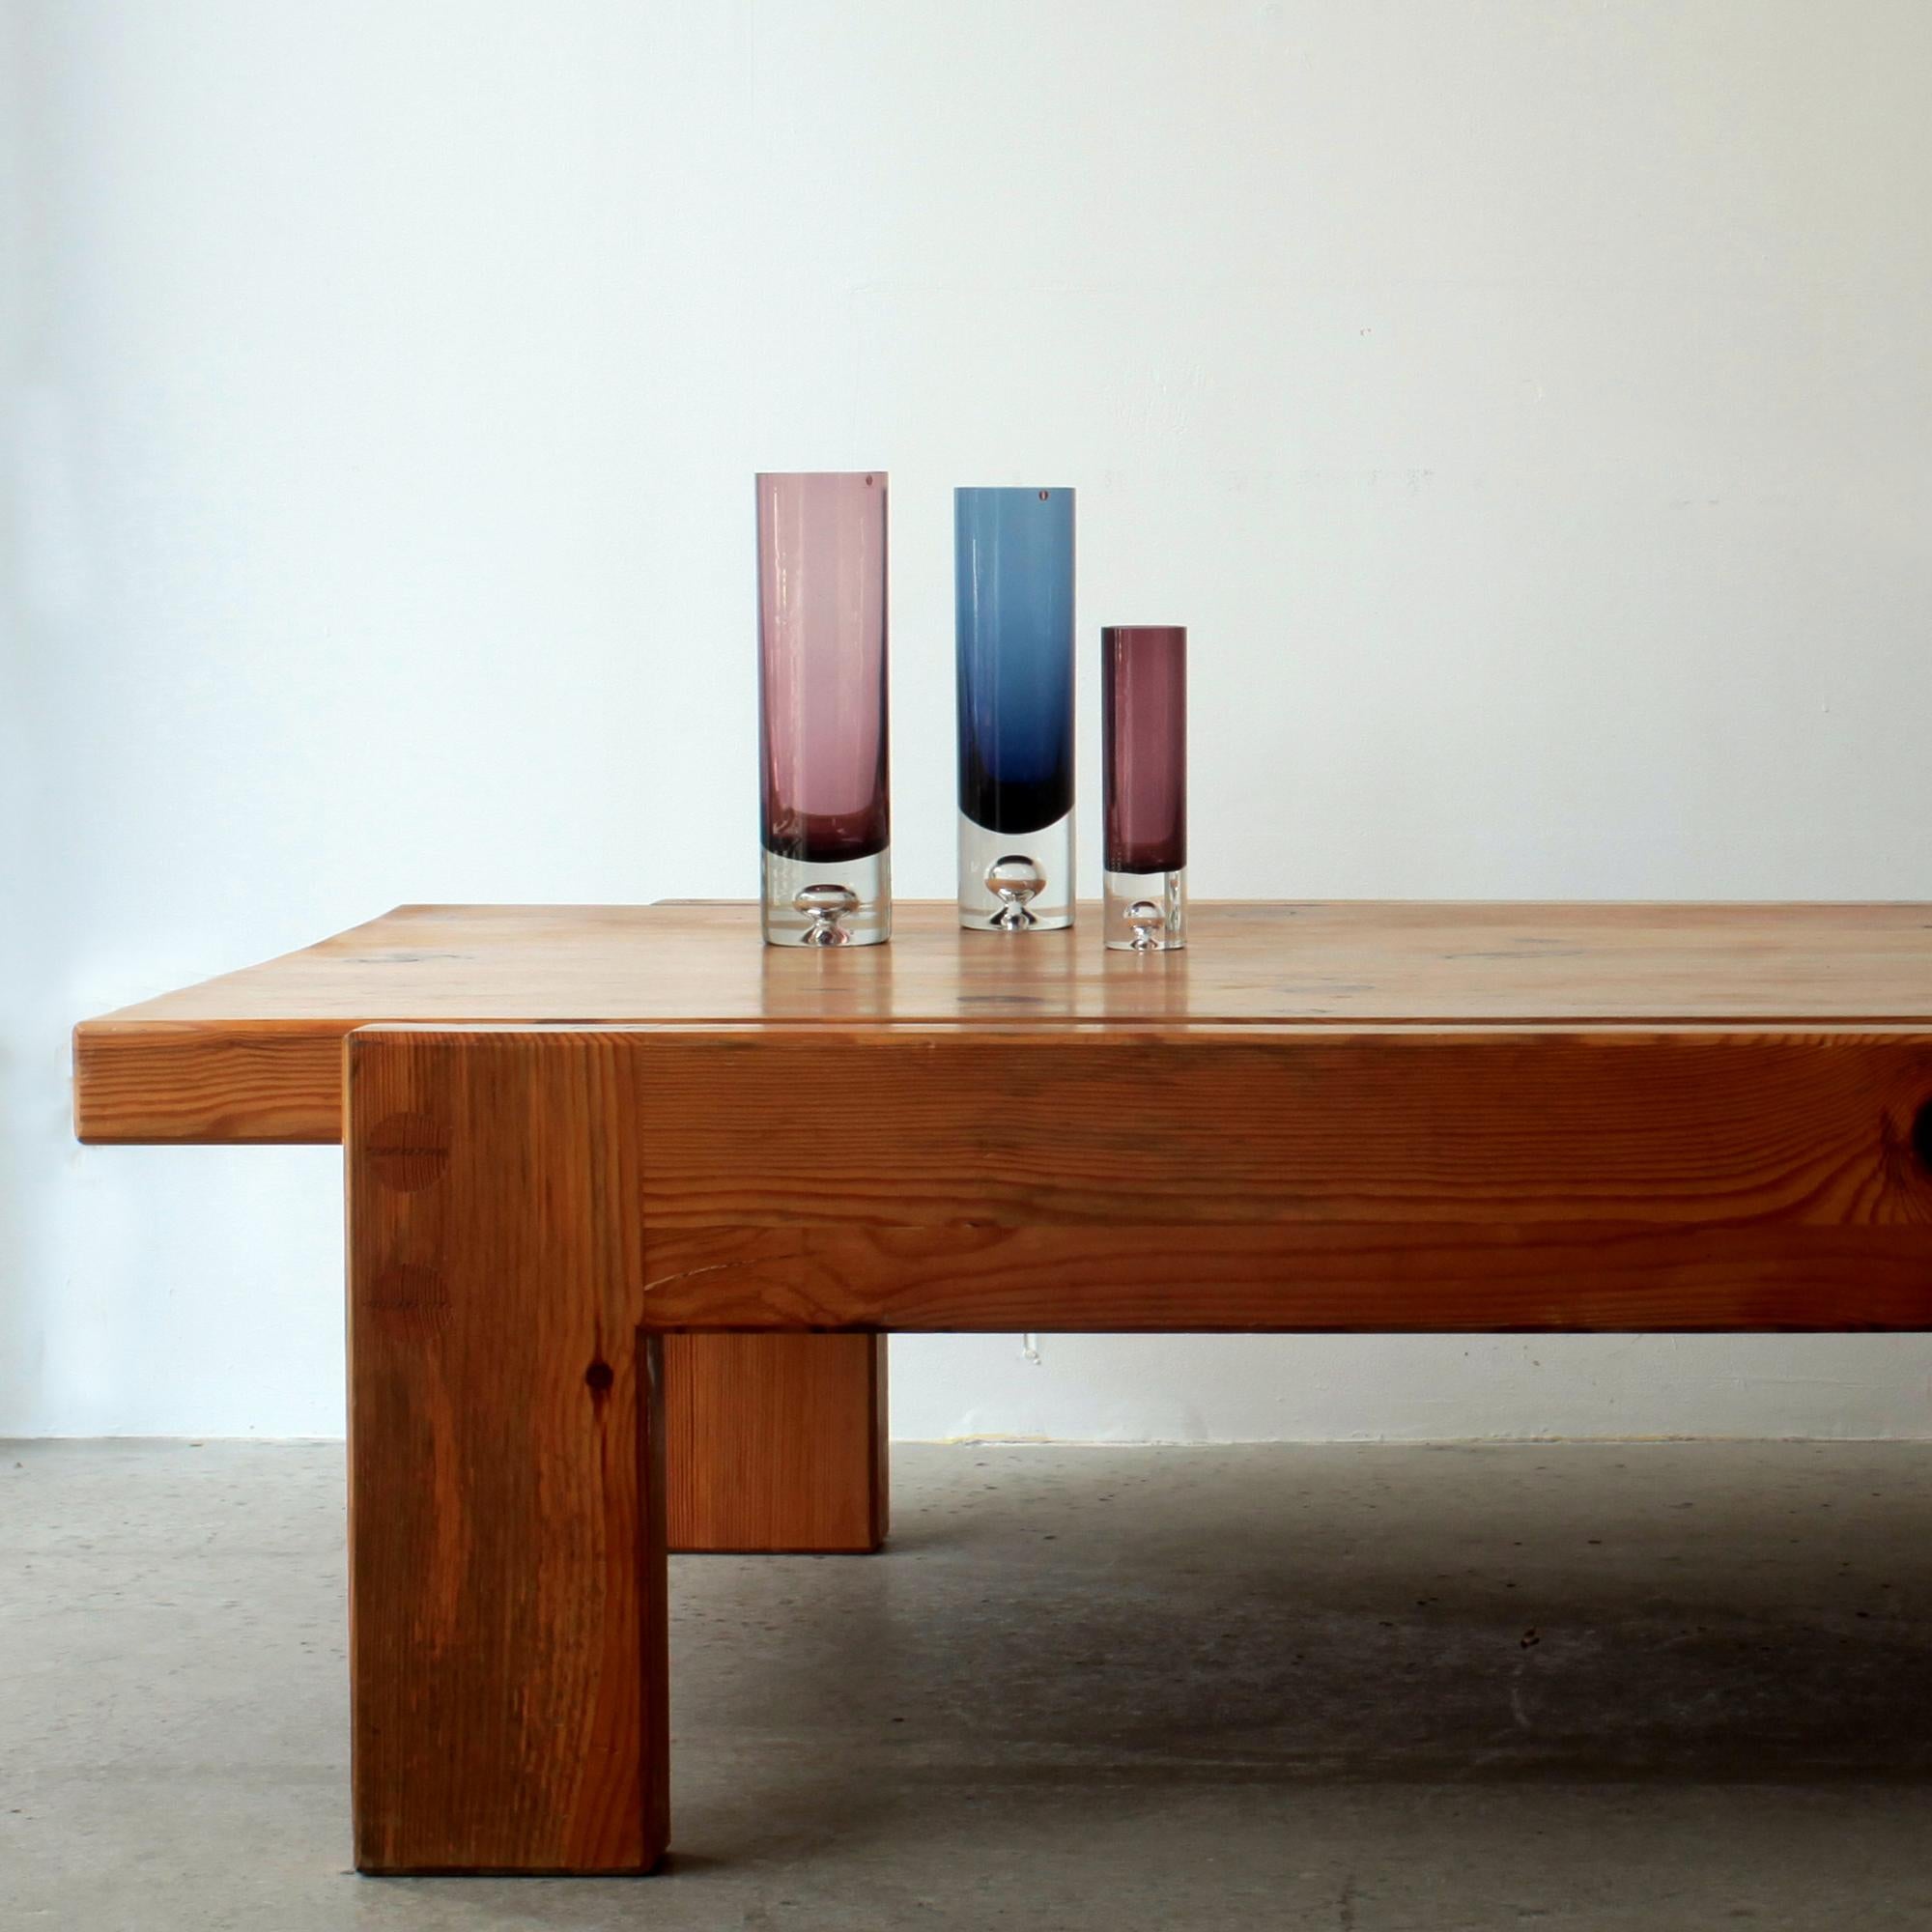 Tapio Wirkkala for Iittala Finland Set of 3 Colored Glass Vases For Sale 2